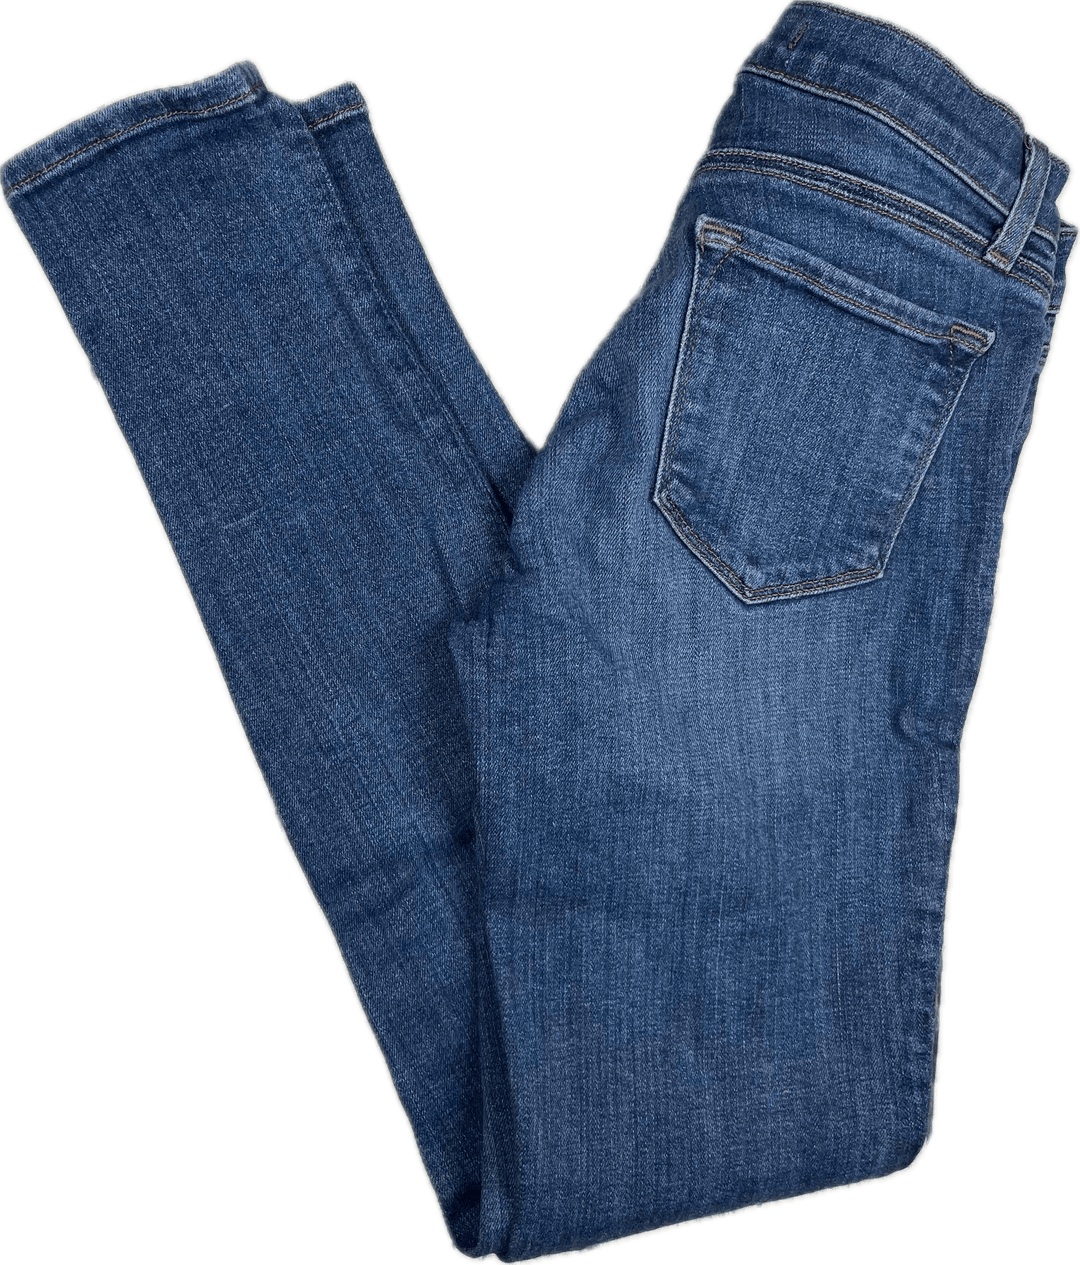 J Brand 'Skinny Leg' Mid Rise Jeans in Blue Bell Wash- Size 25 - Jean Pool